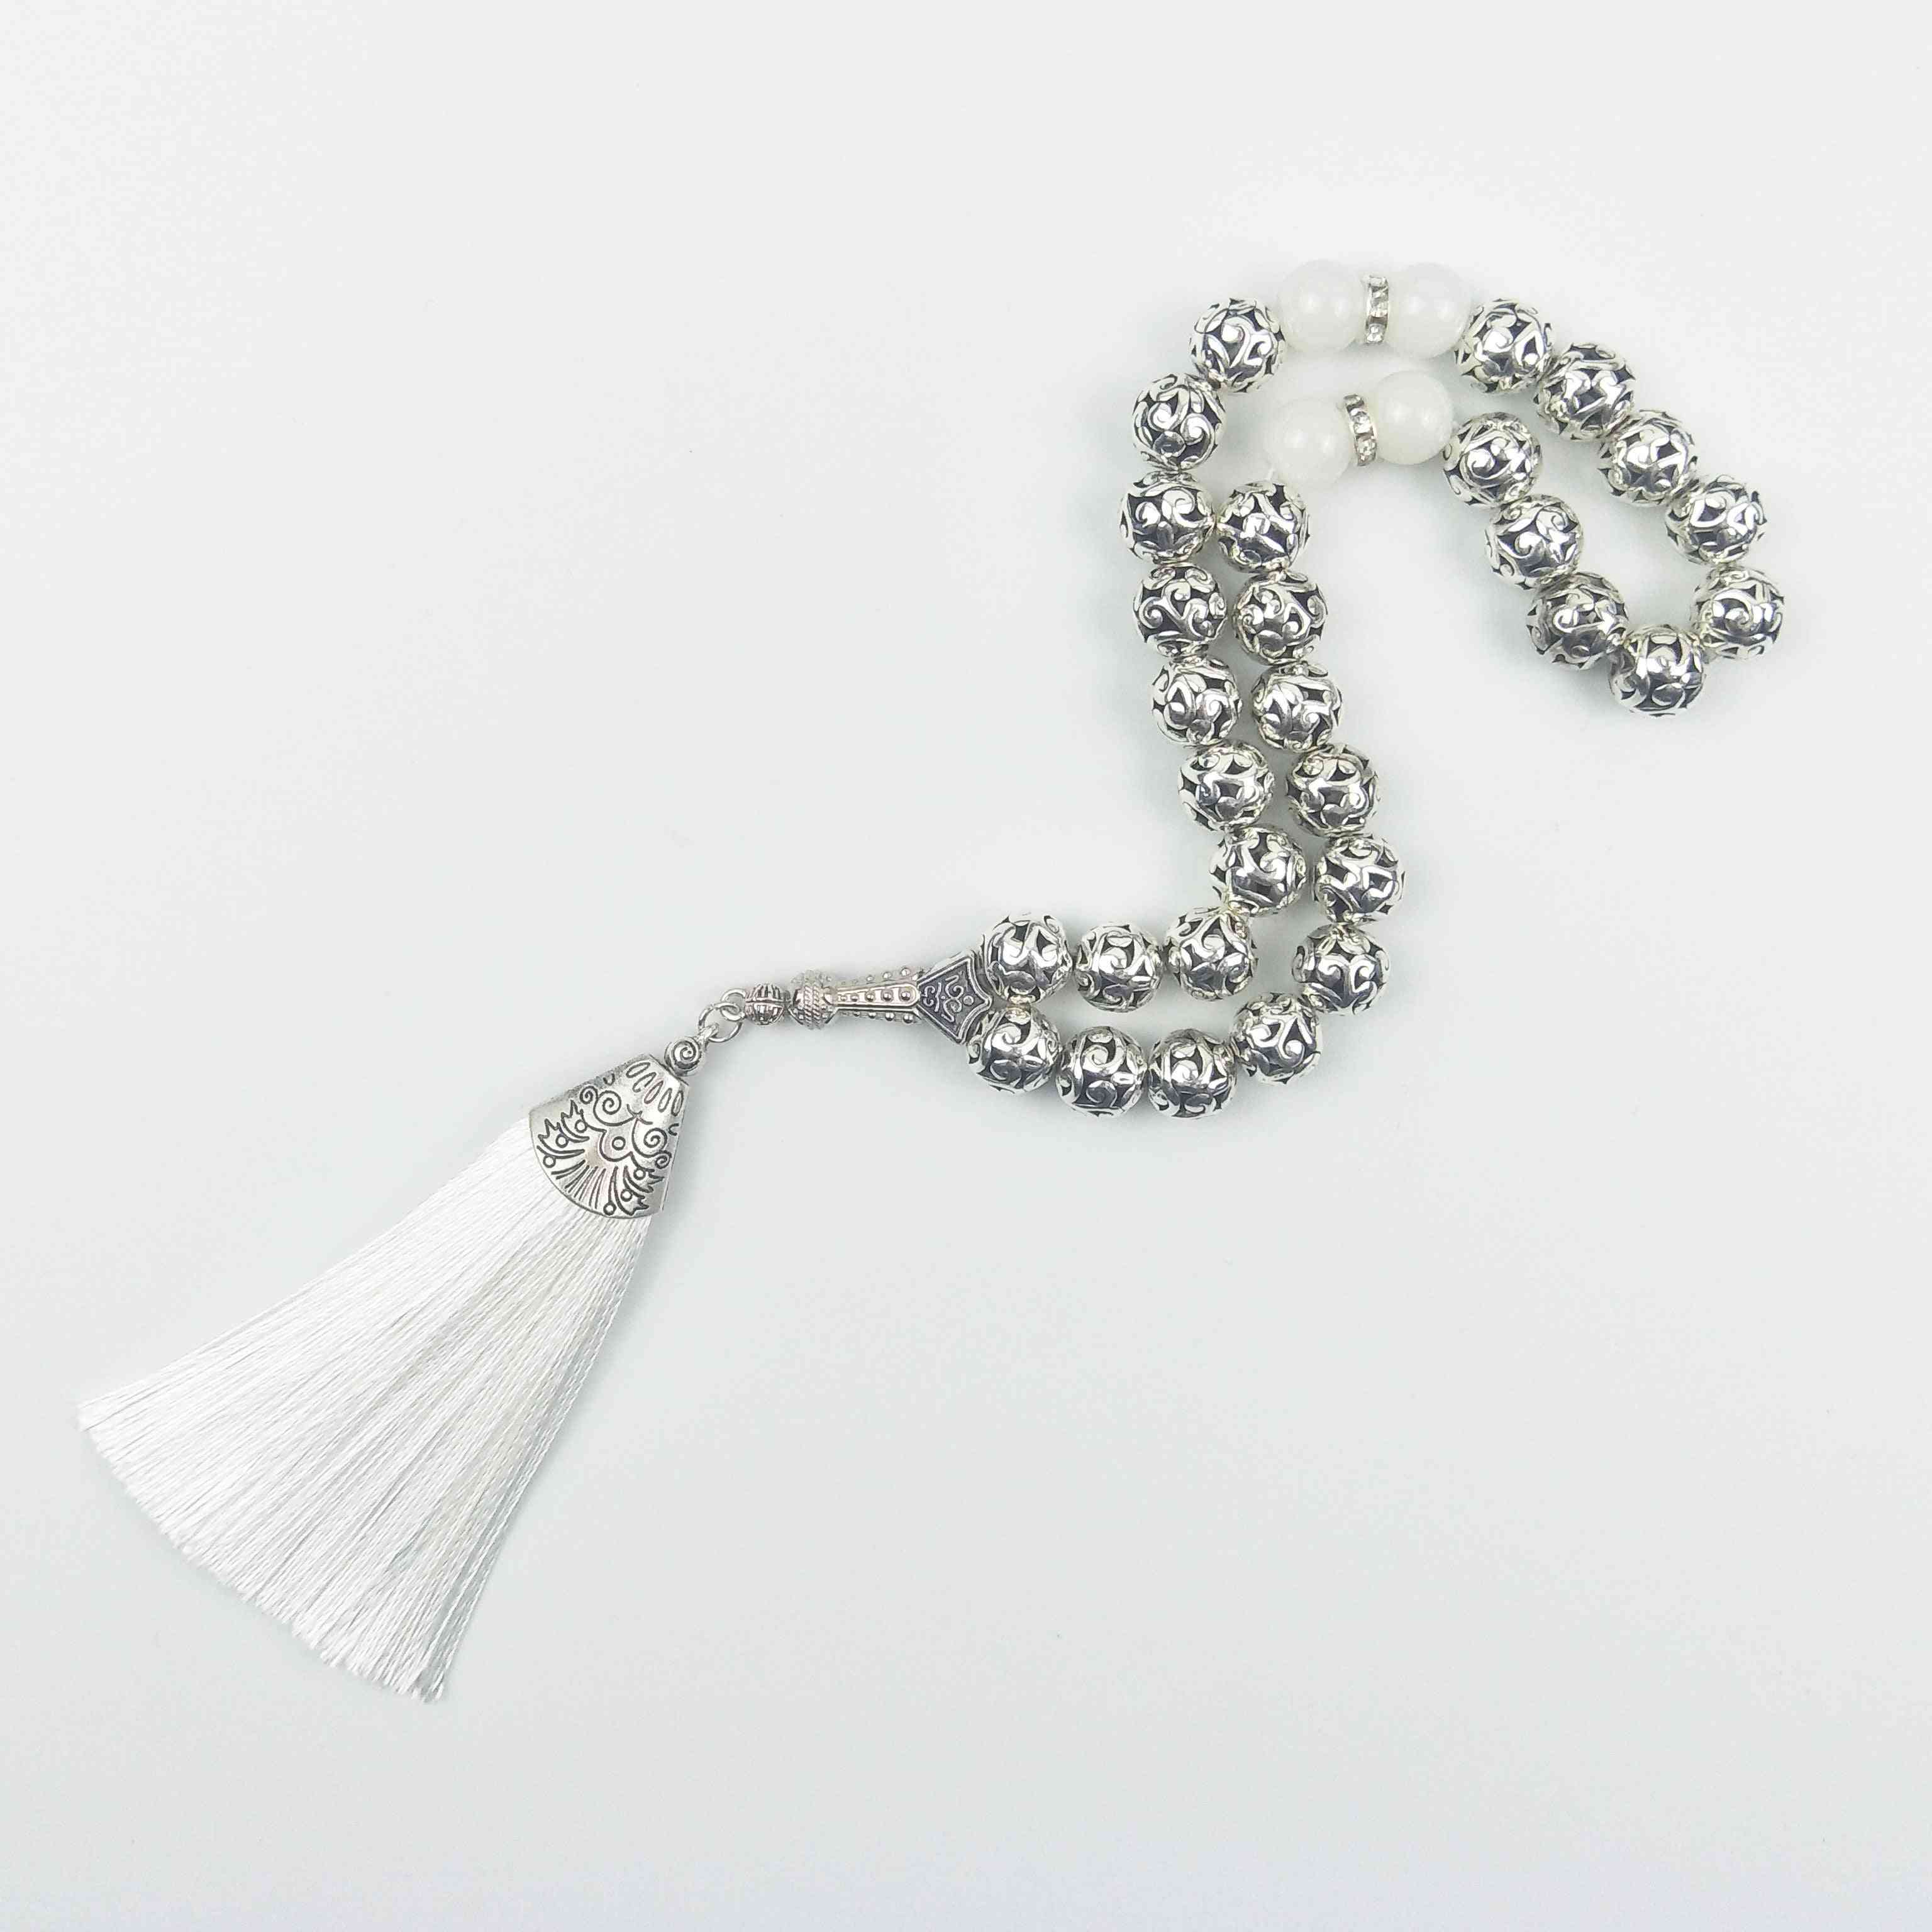 10mm Silver Plated Prayer Beads Bracelet